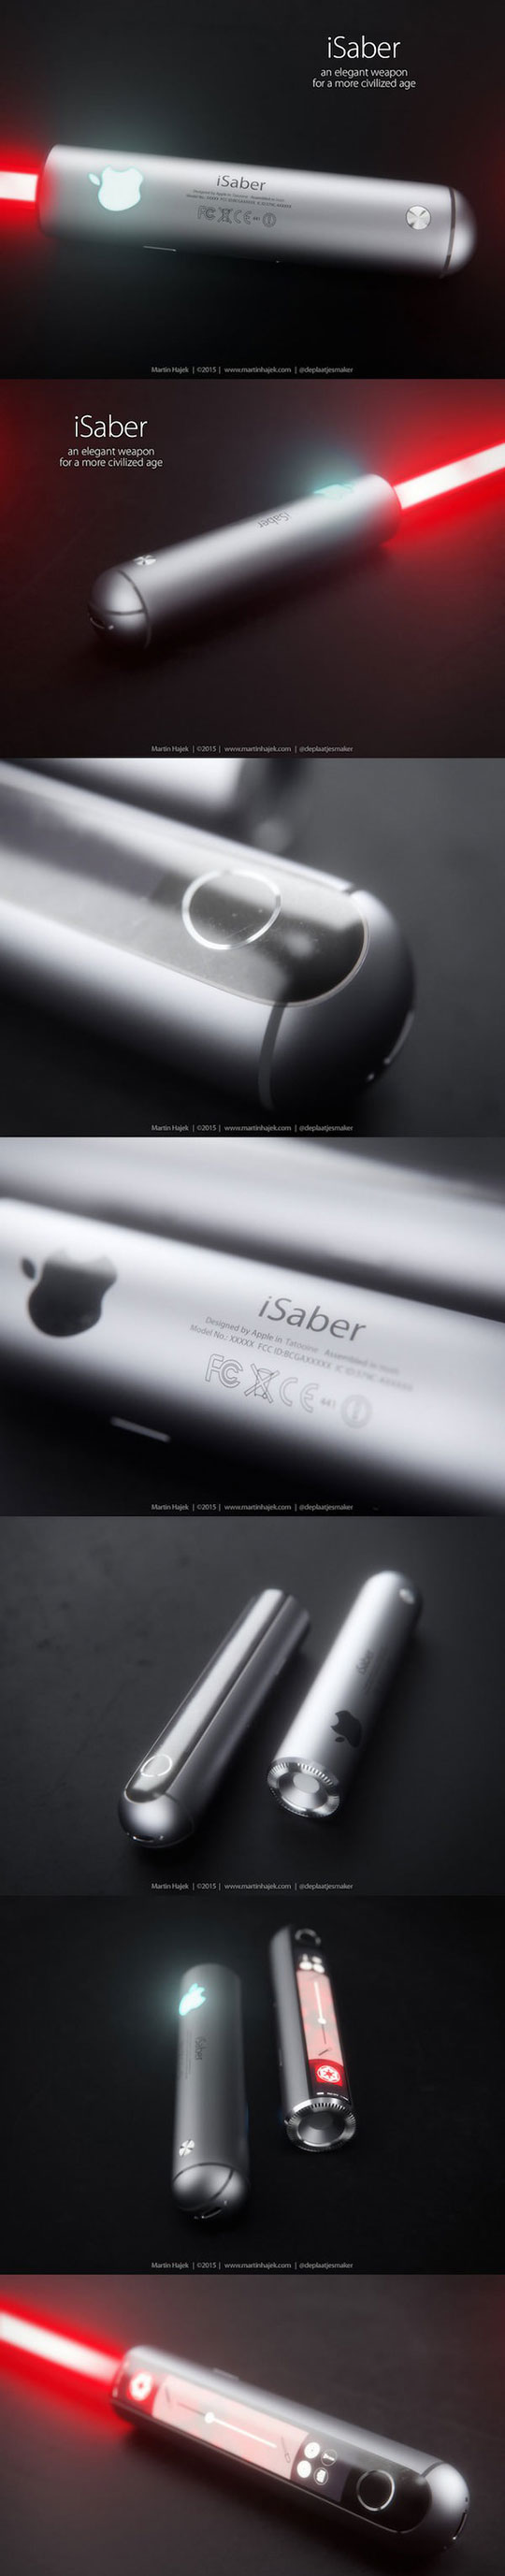 1cool-isaber-design-apple-prototype